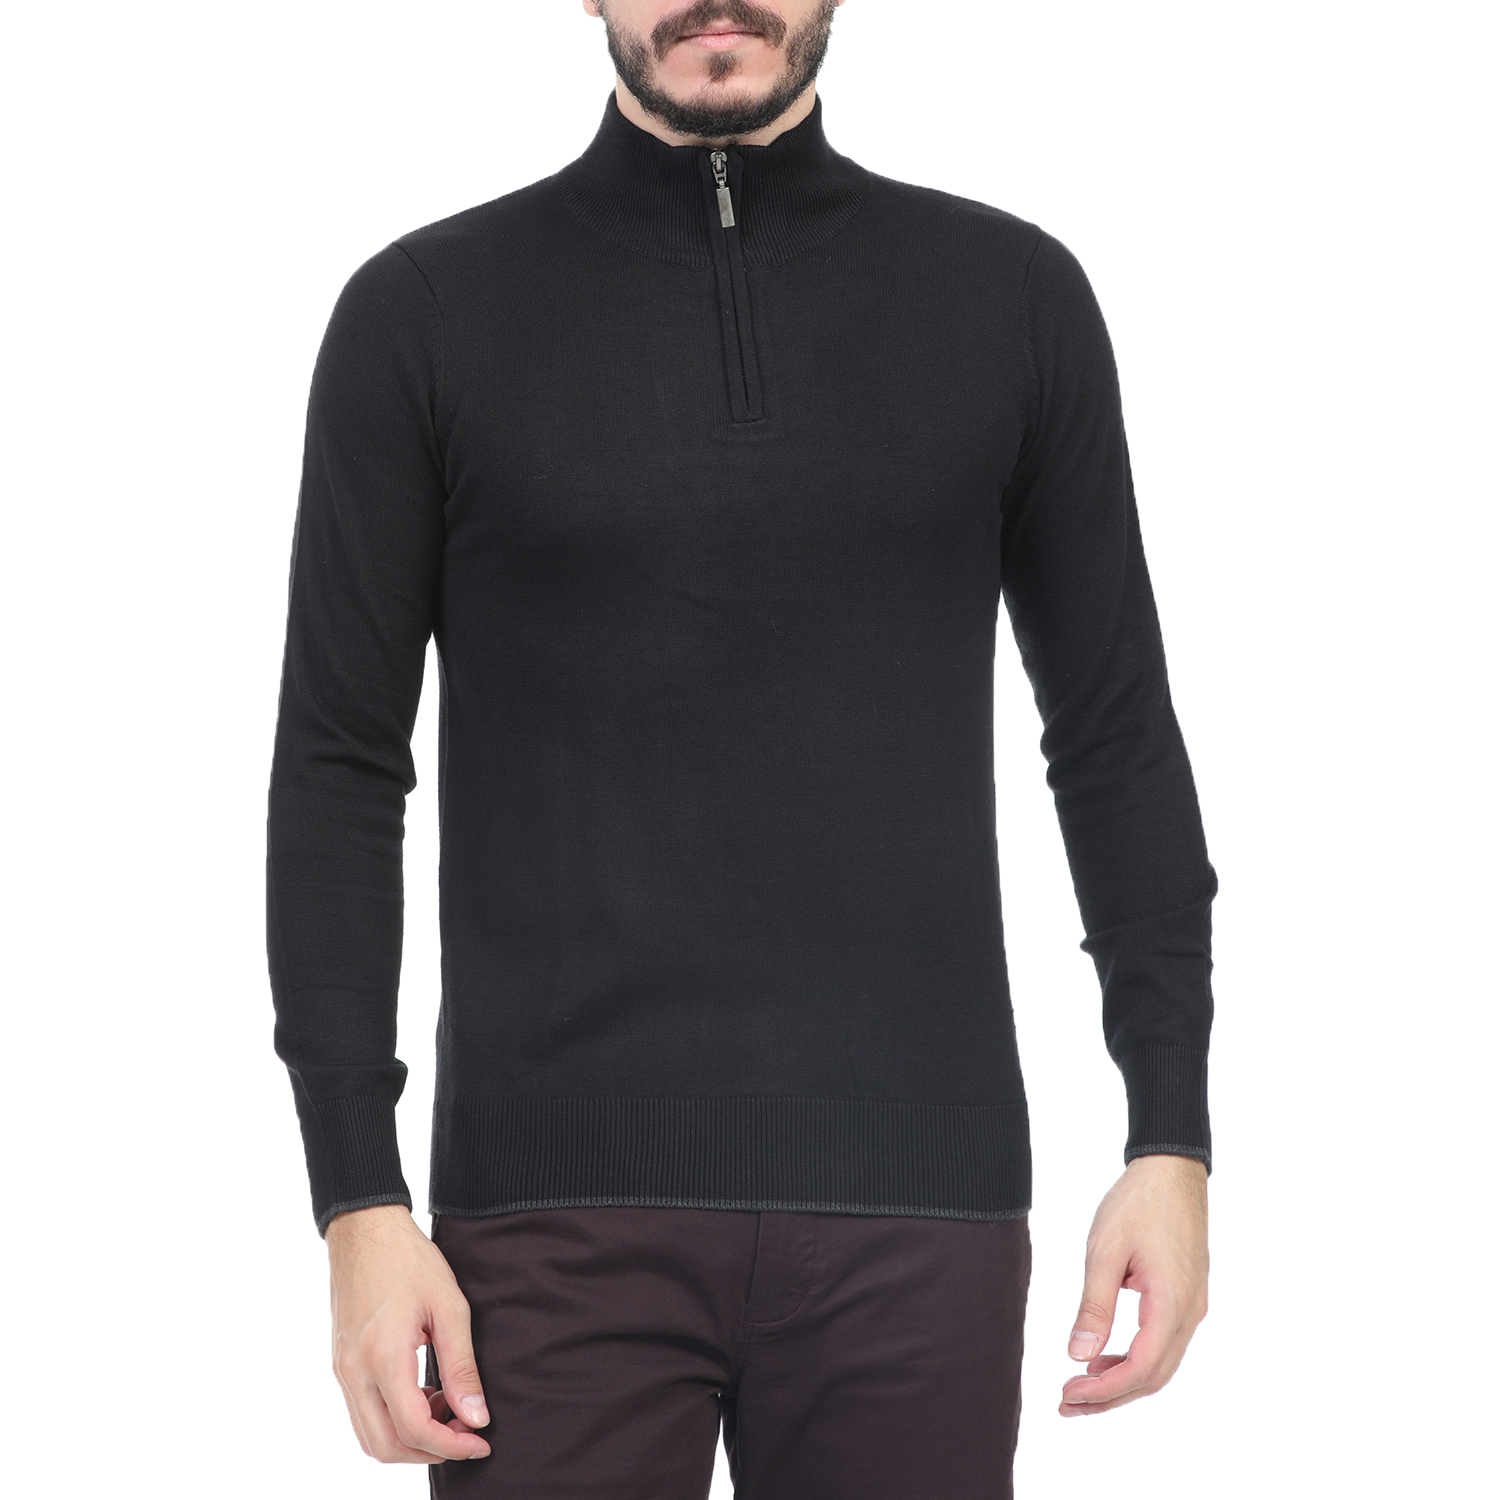 GREENWOOD - Ανδρική πλεκτή μπλούζα GREENWOOD μαύρη Ανδρικά/Ρούχα/Πλεκτά-Ζακέτες/Πουλόβερ